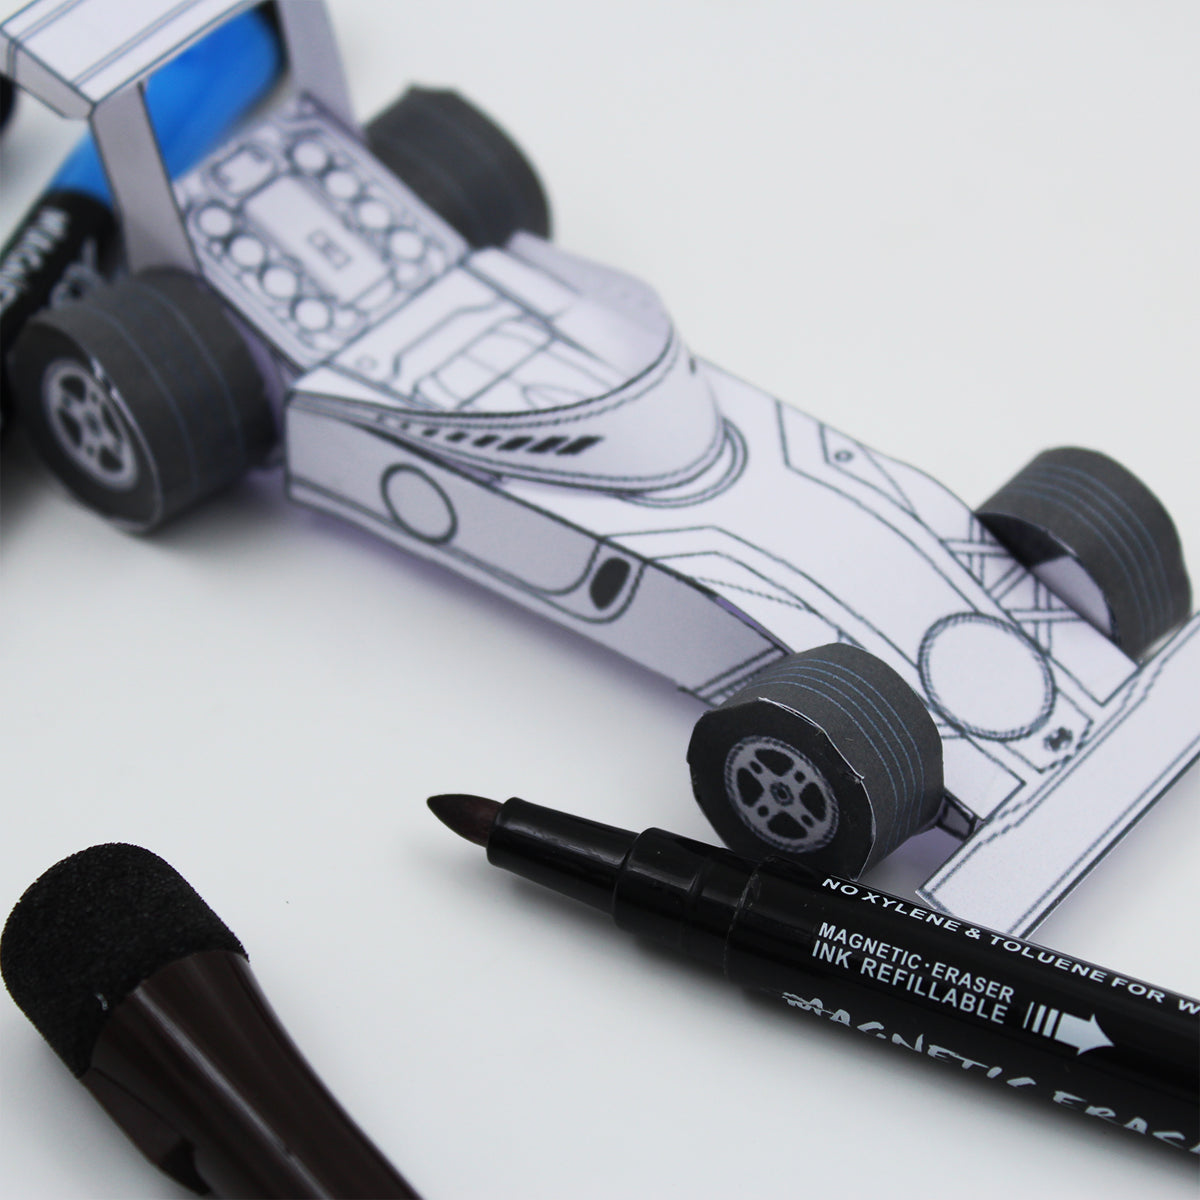 F1 Car Paper Craft Toy